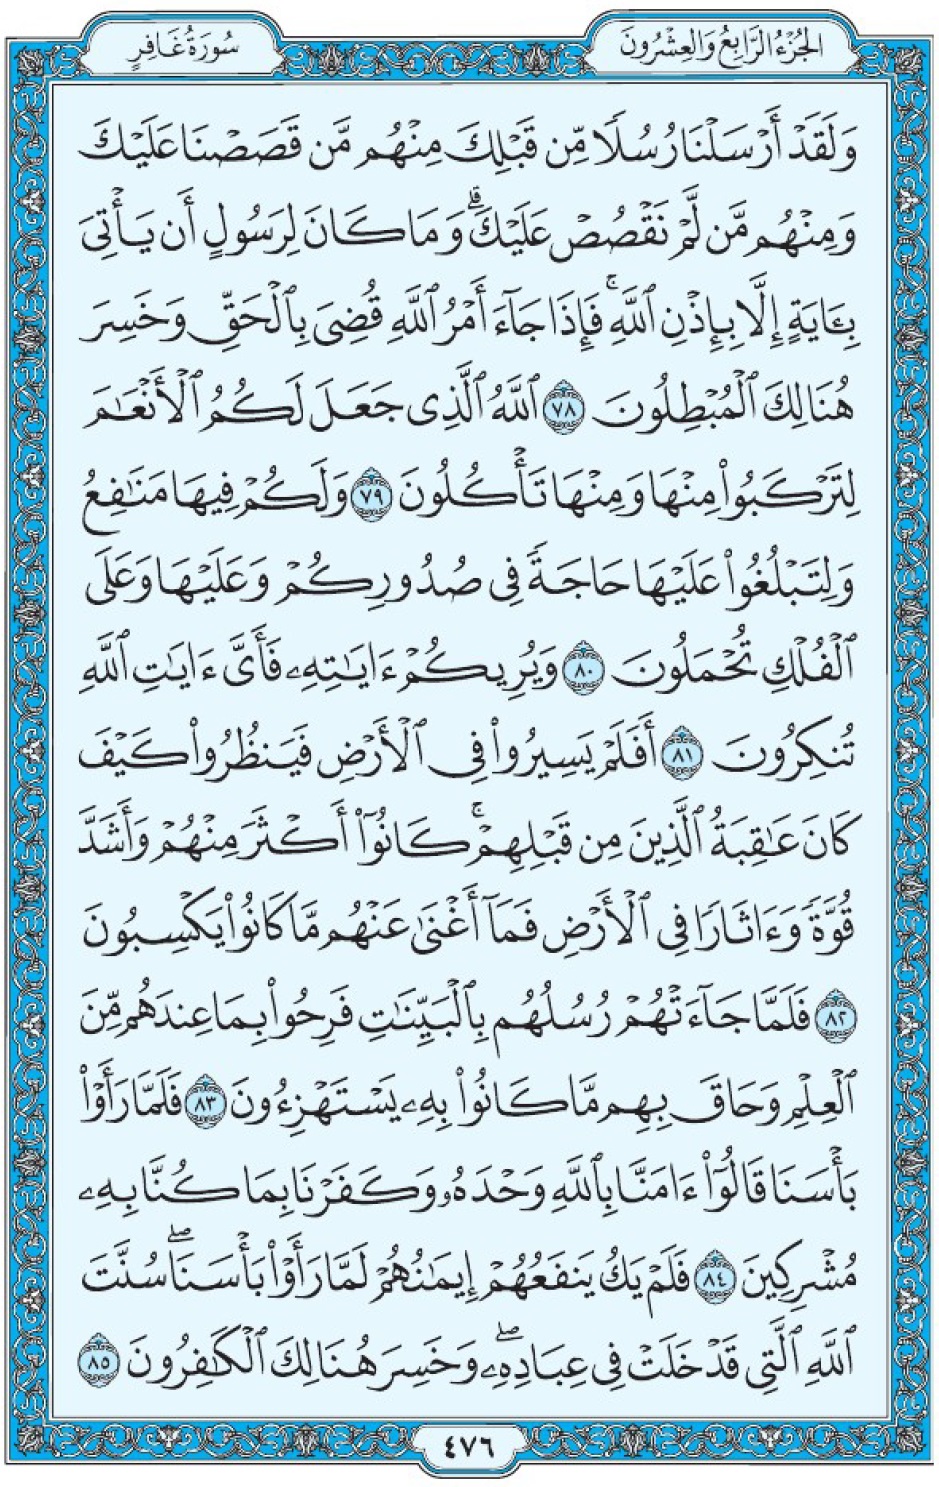 Коран Мединский мусхаф страница 476, Гафир, аят 78-85